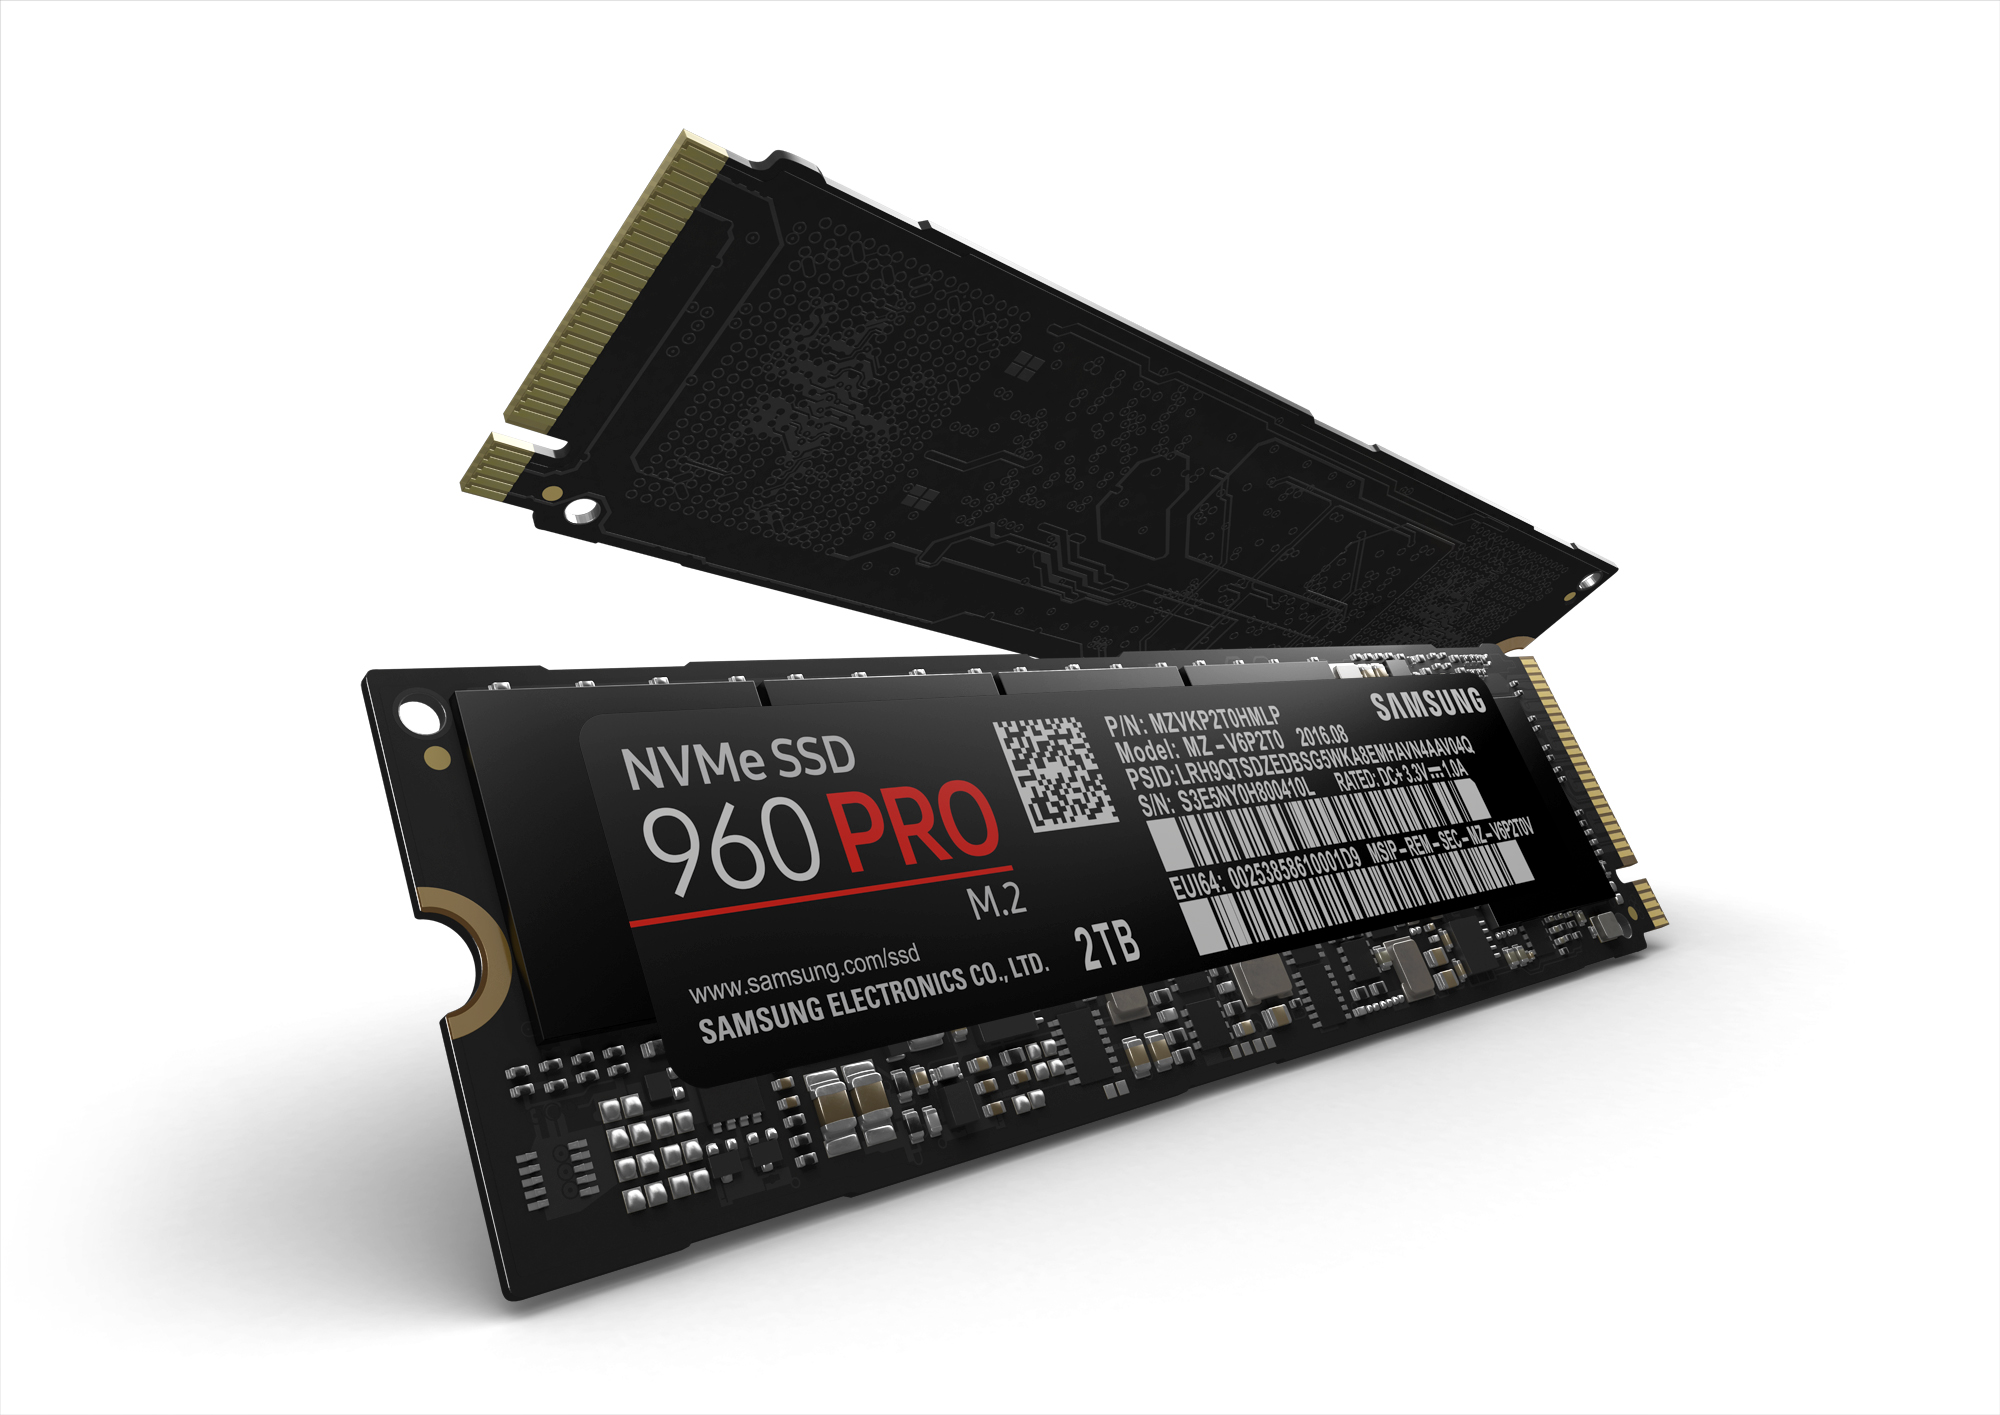 Samsung Announces the 960 PRO and 960 EVO